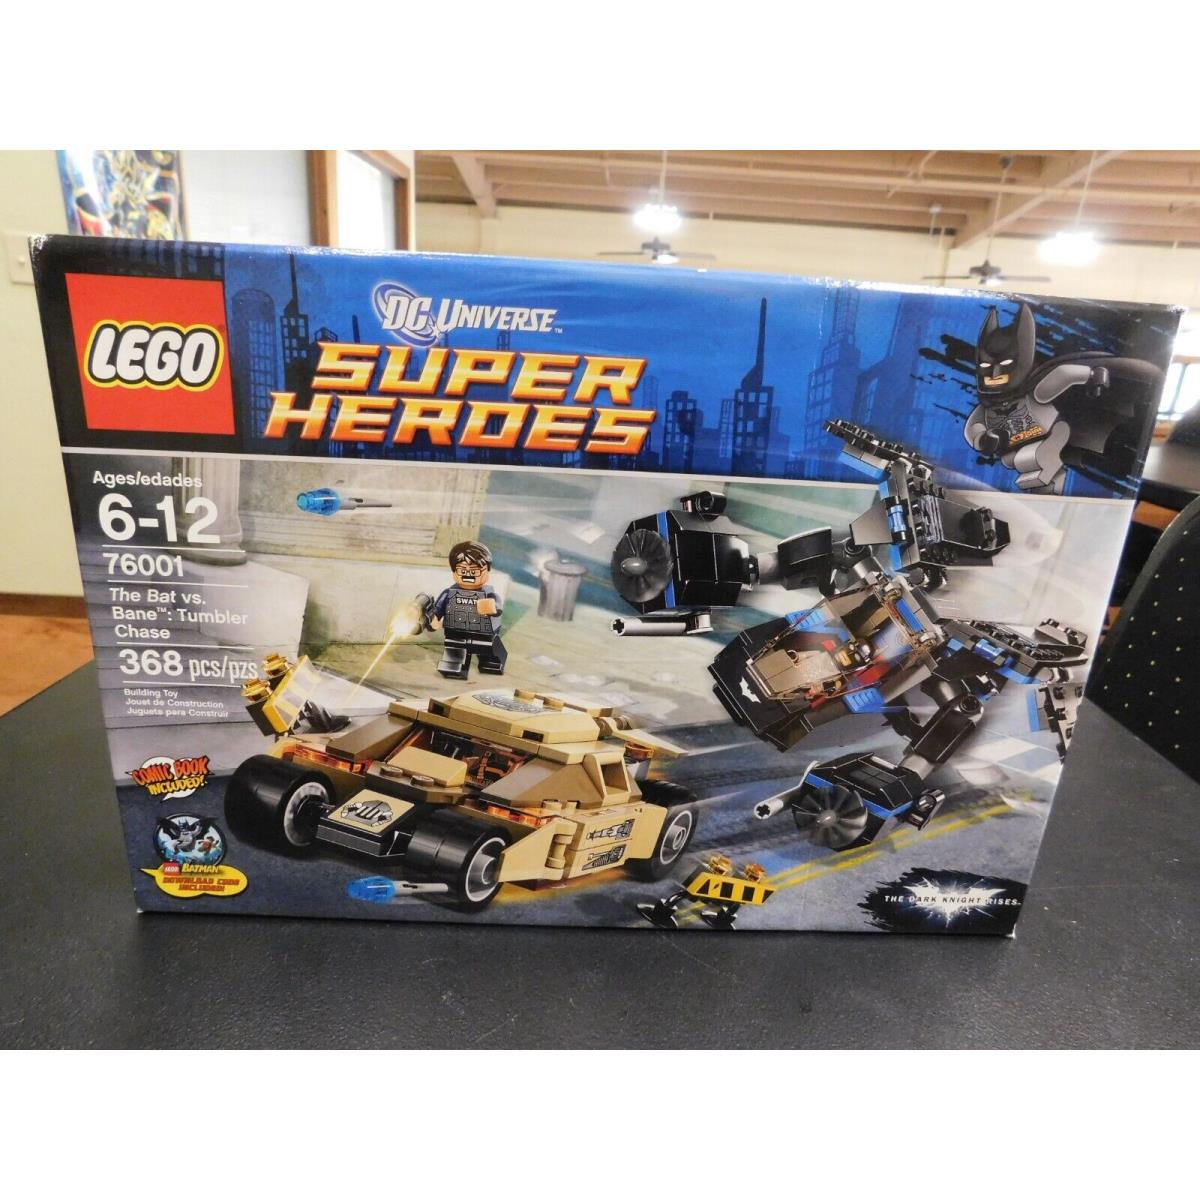 Lego 76001 The Bat VS Bane Tumbler Chase dc Super Heroes Set Batman Box Damage